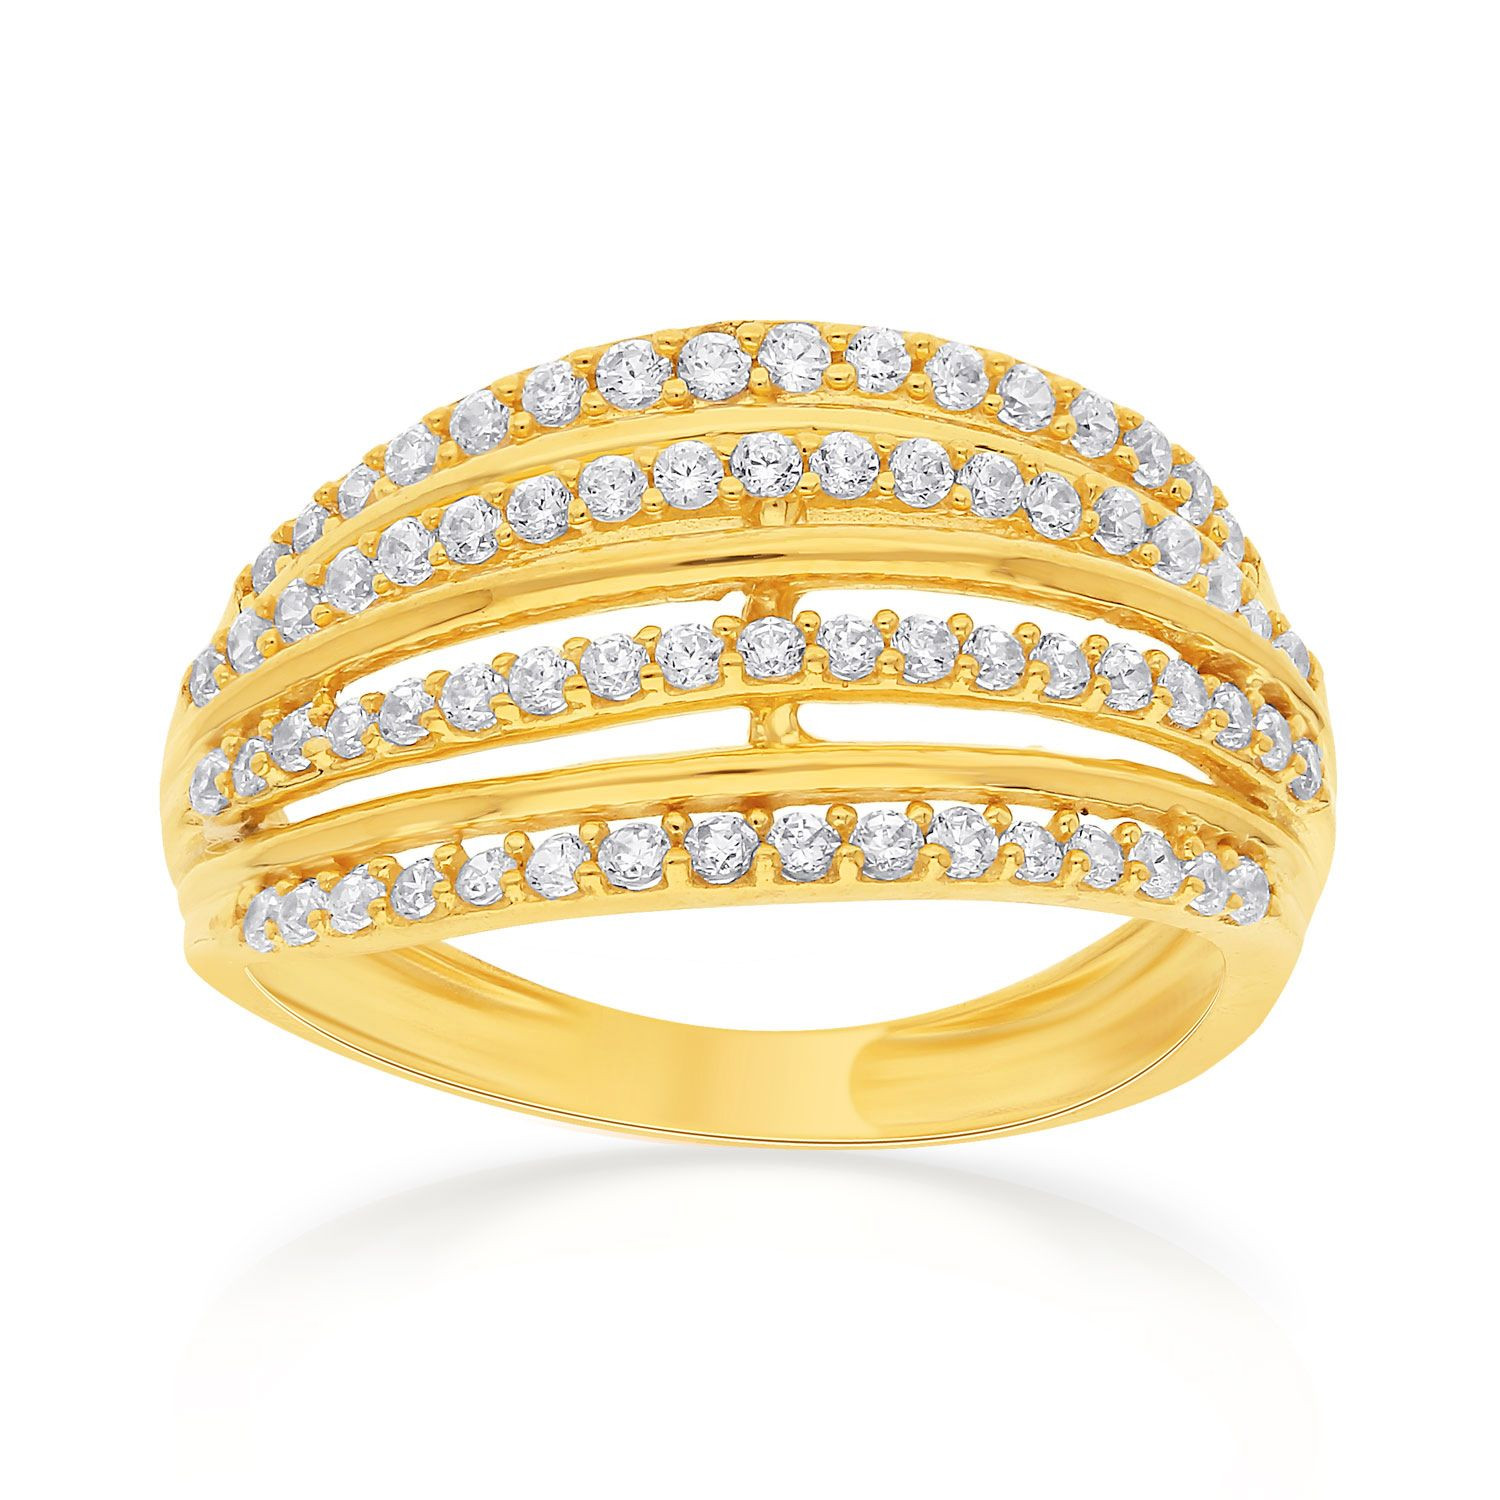 Buy Latest Design Ring Online - Gold & Diamond | Kisna